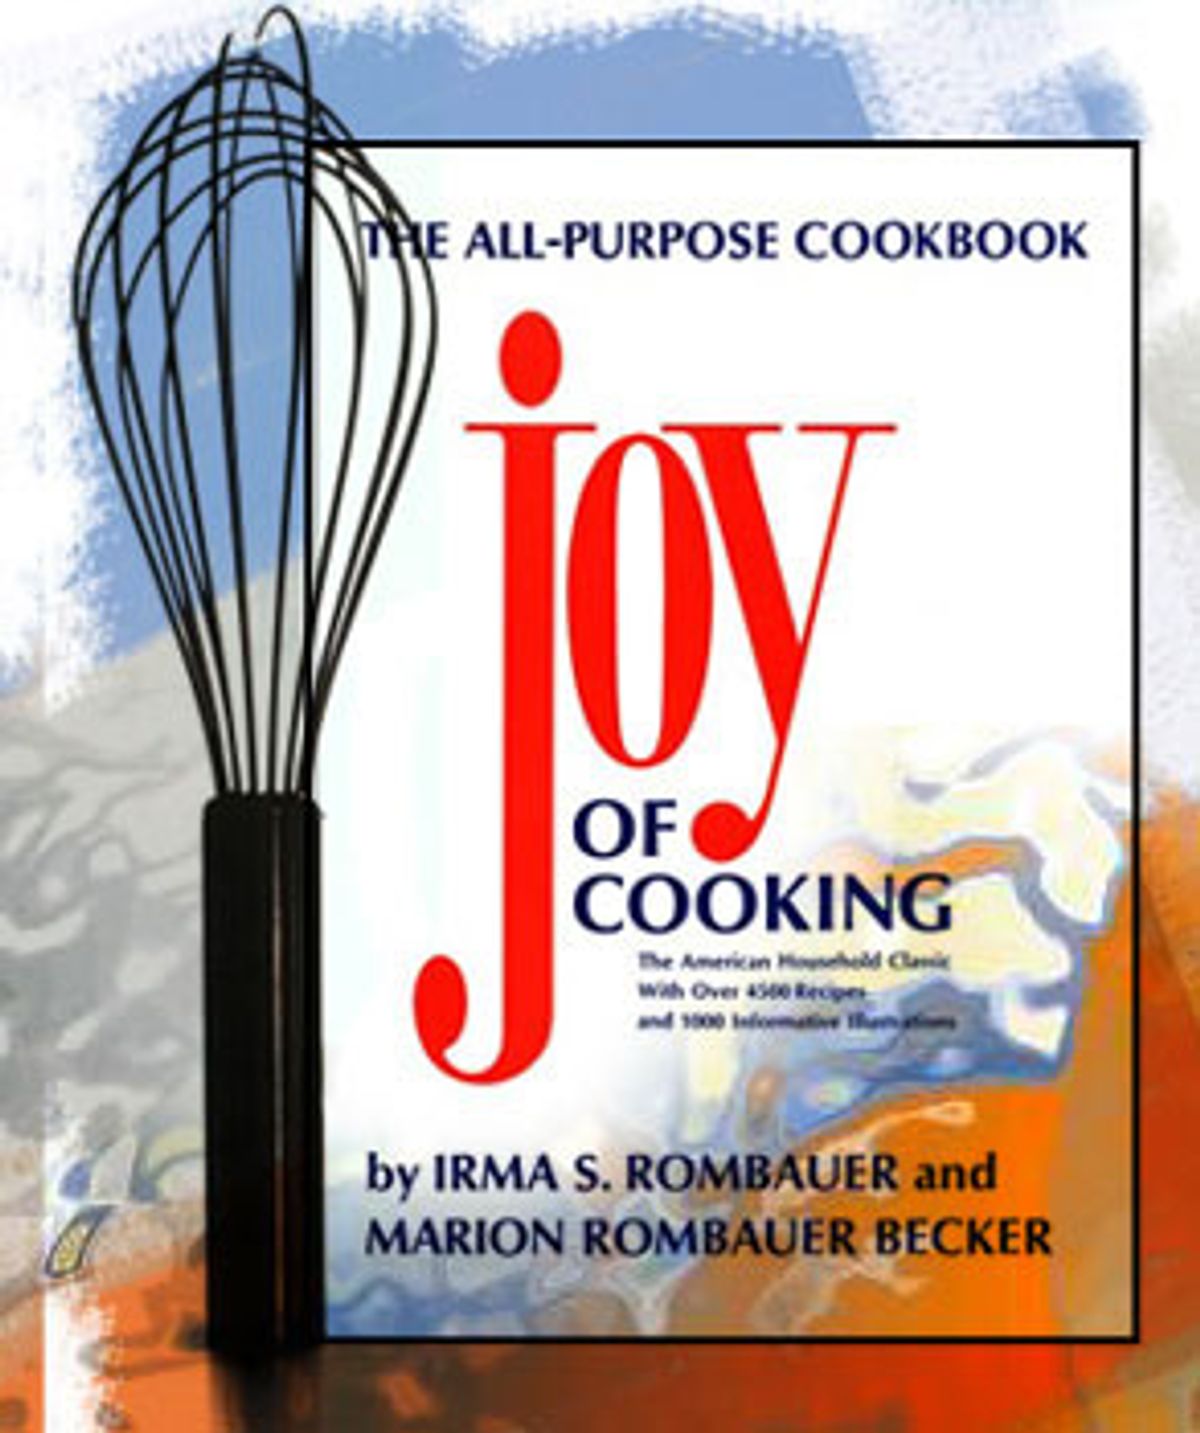 Joy of Cooking - Wikipedia